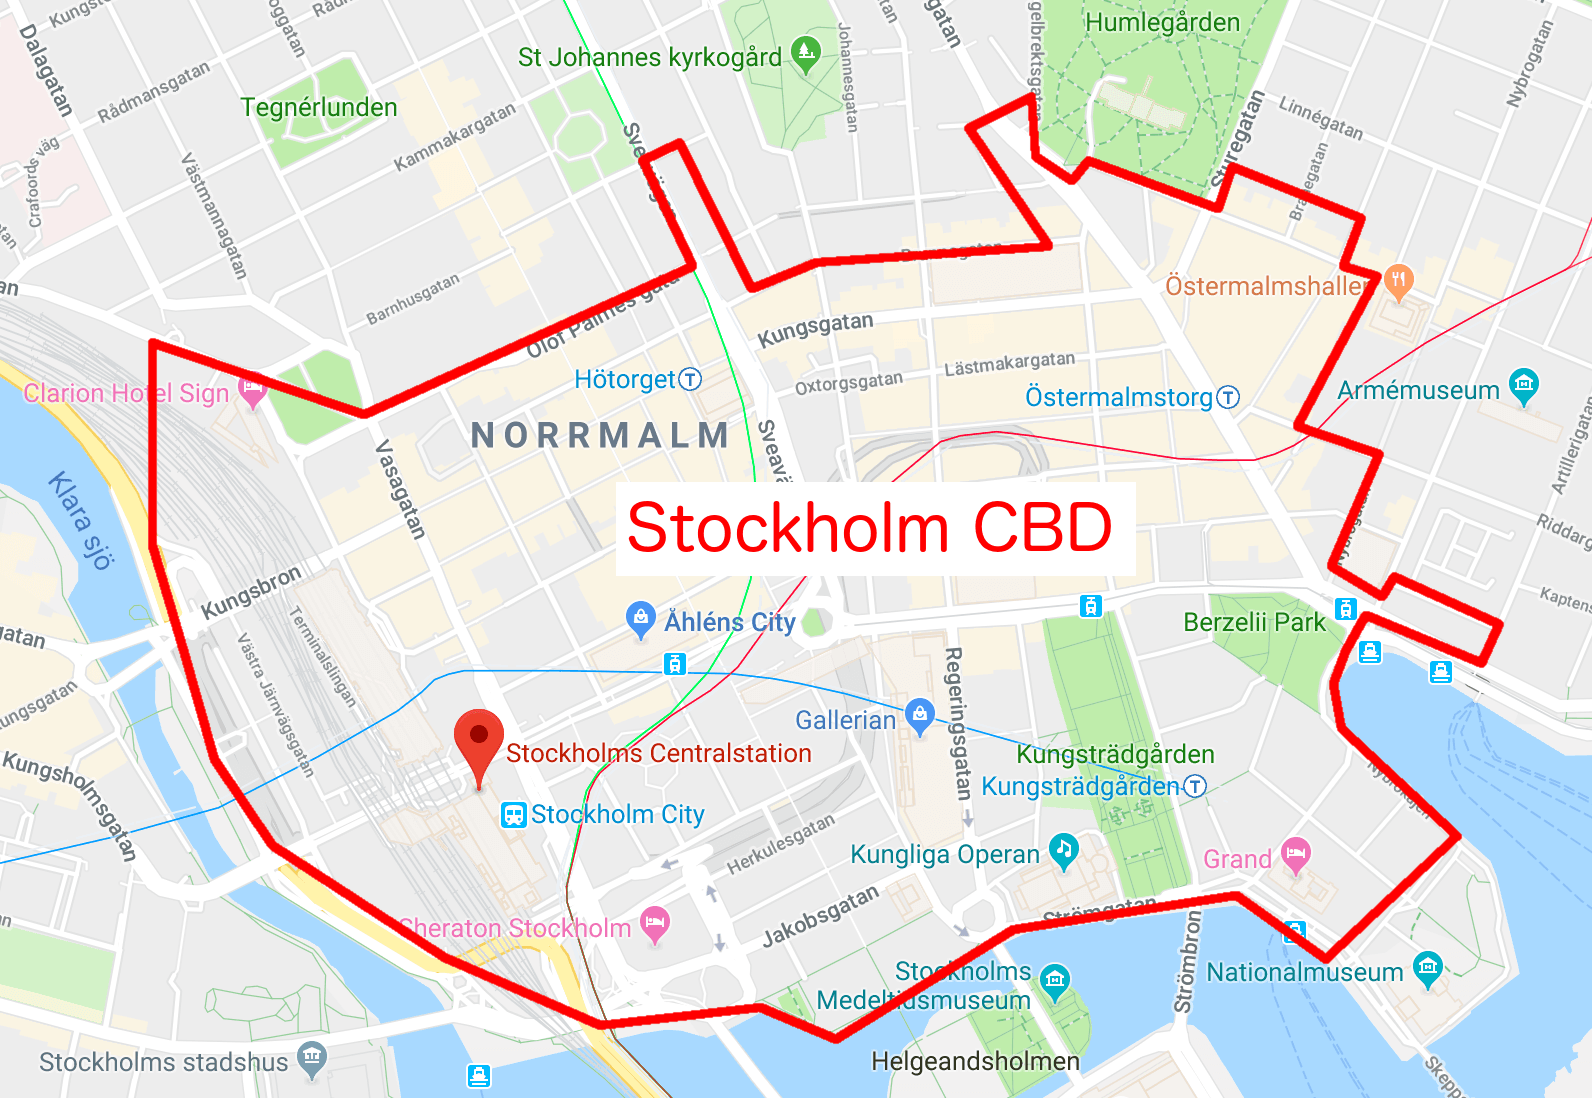 Stockholm CBD central business district